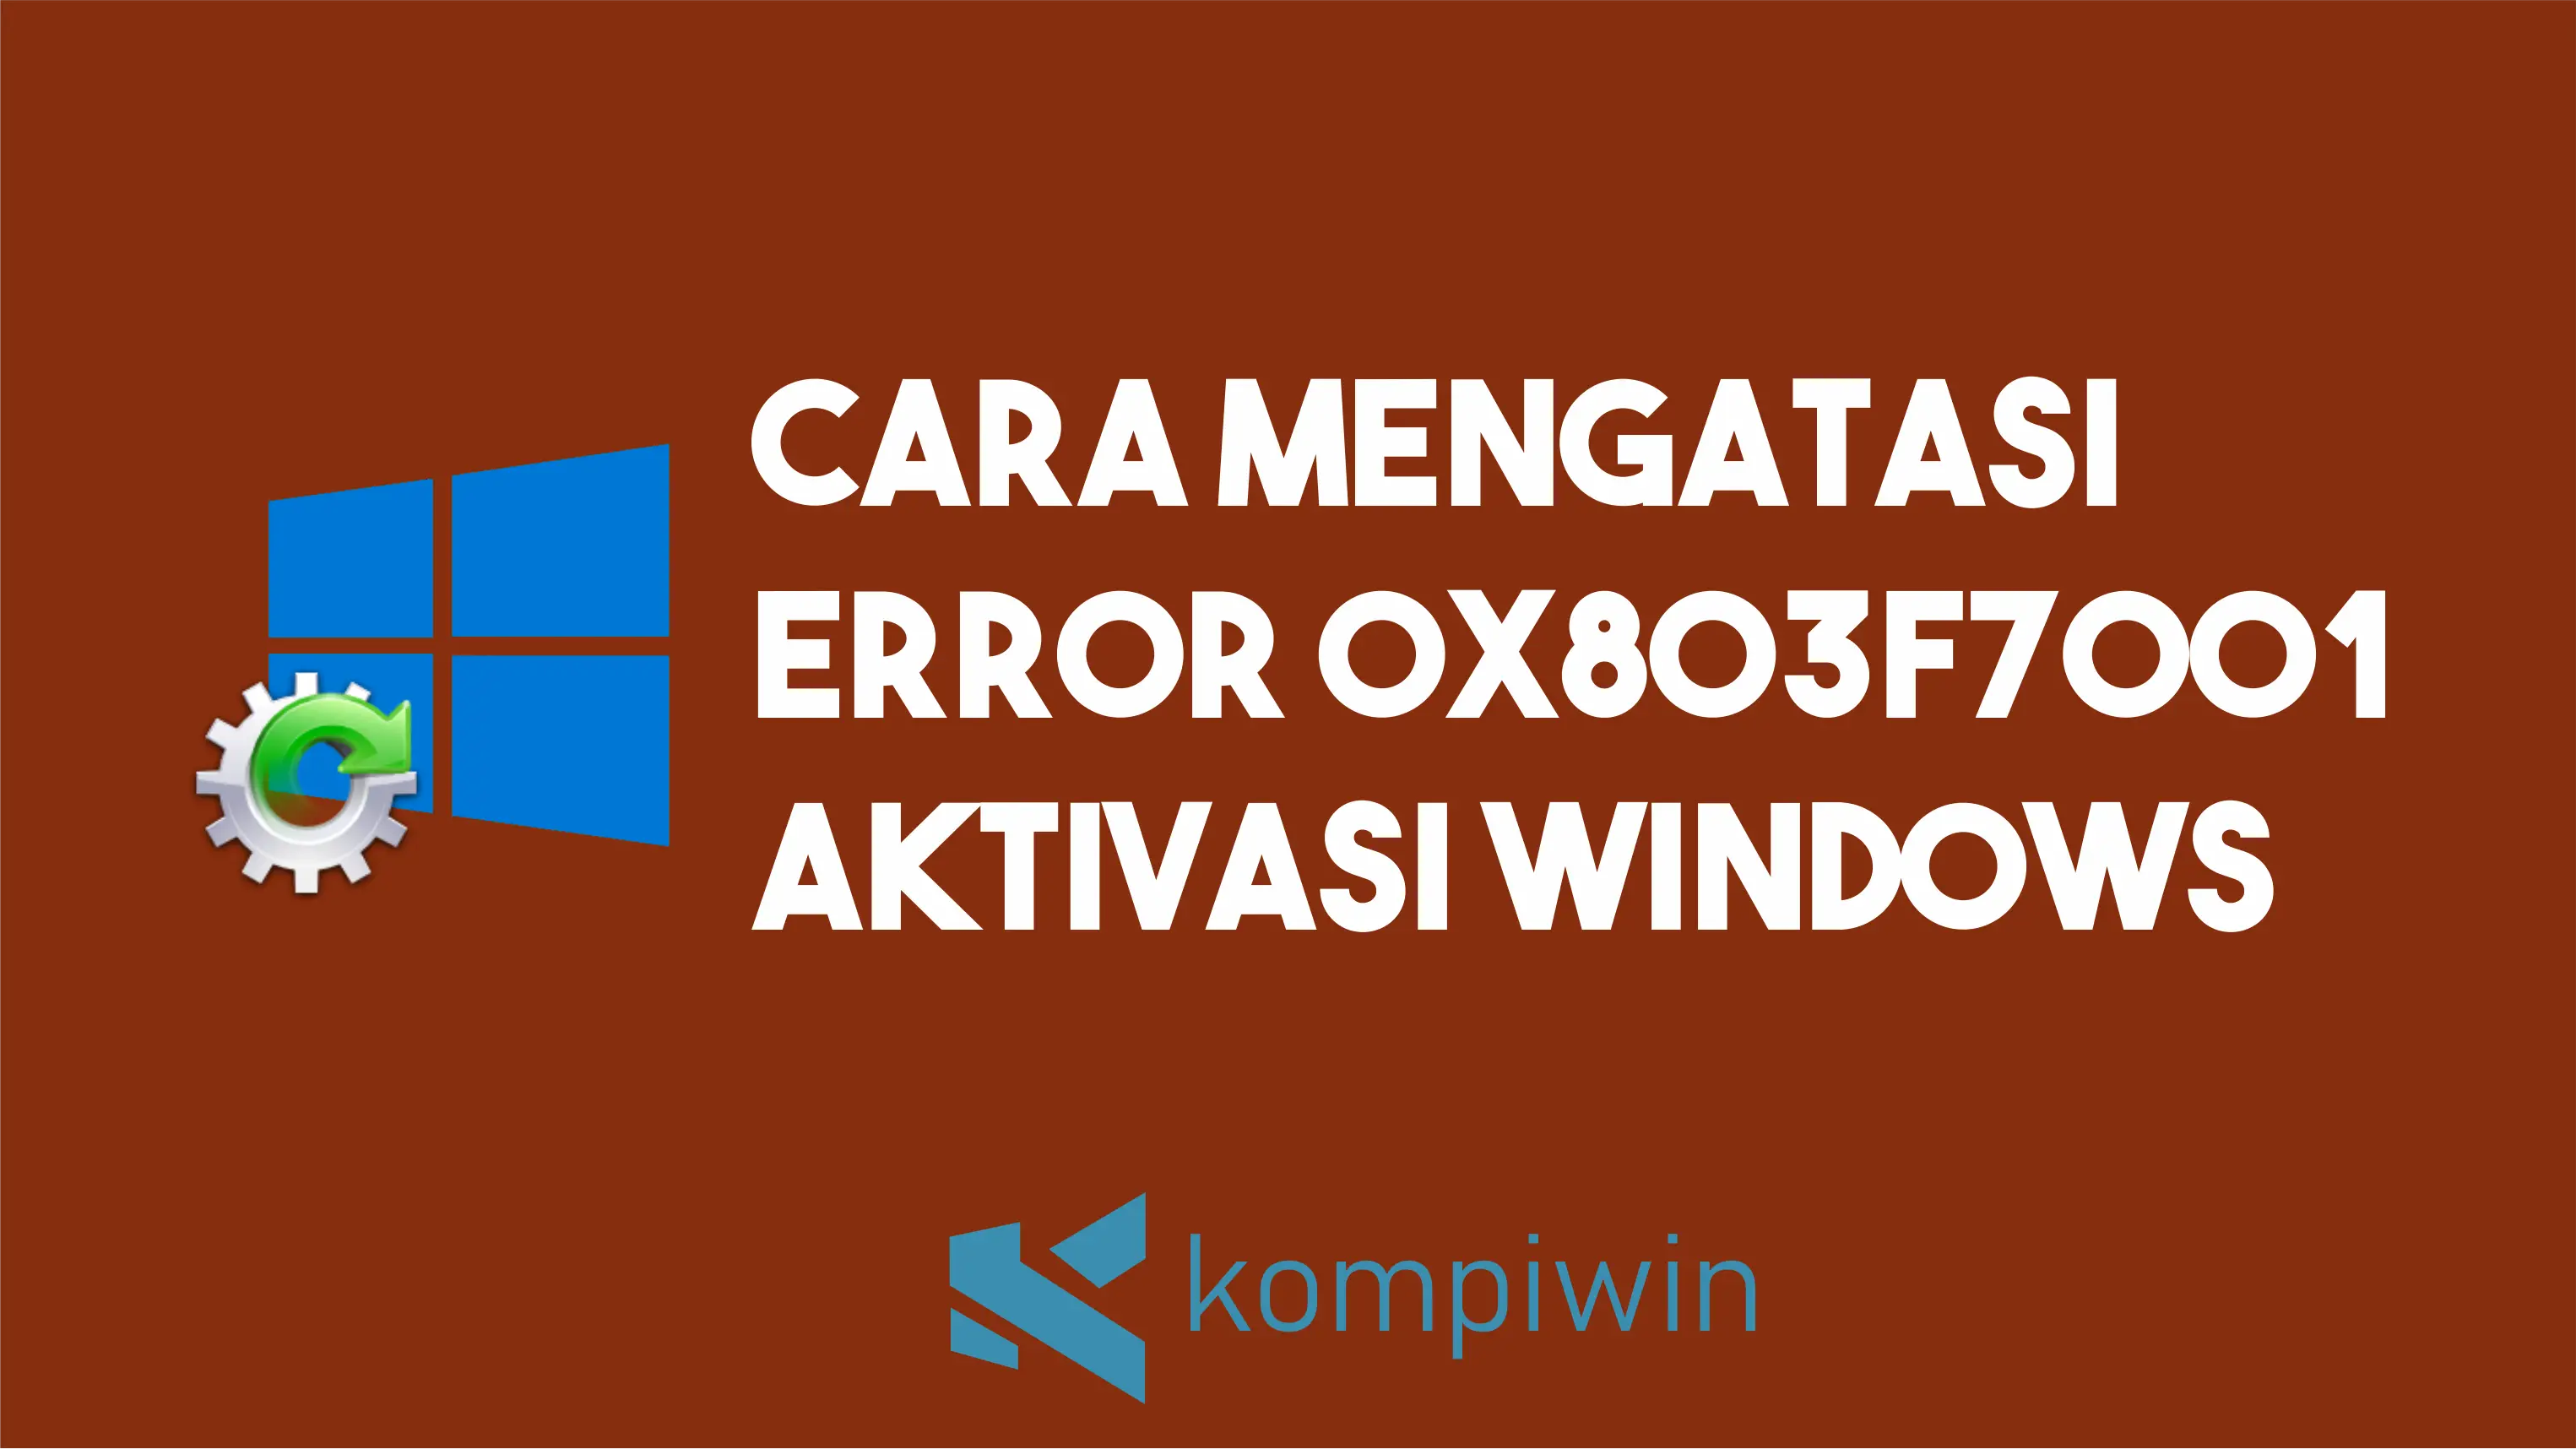 Cara Mengatasi Error 0x803f7001 saat Aktivasi Windows 1